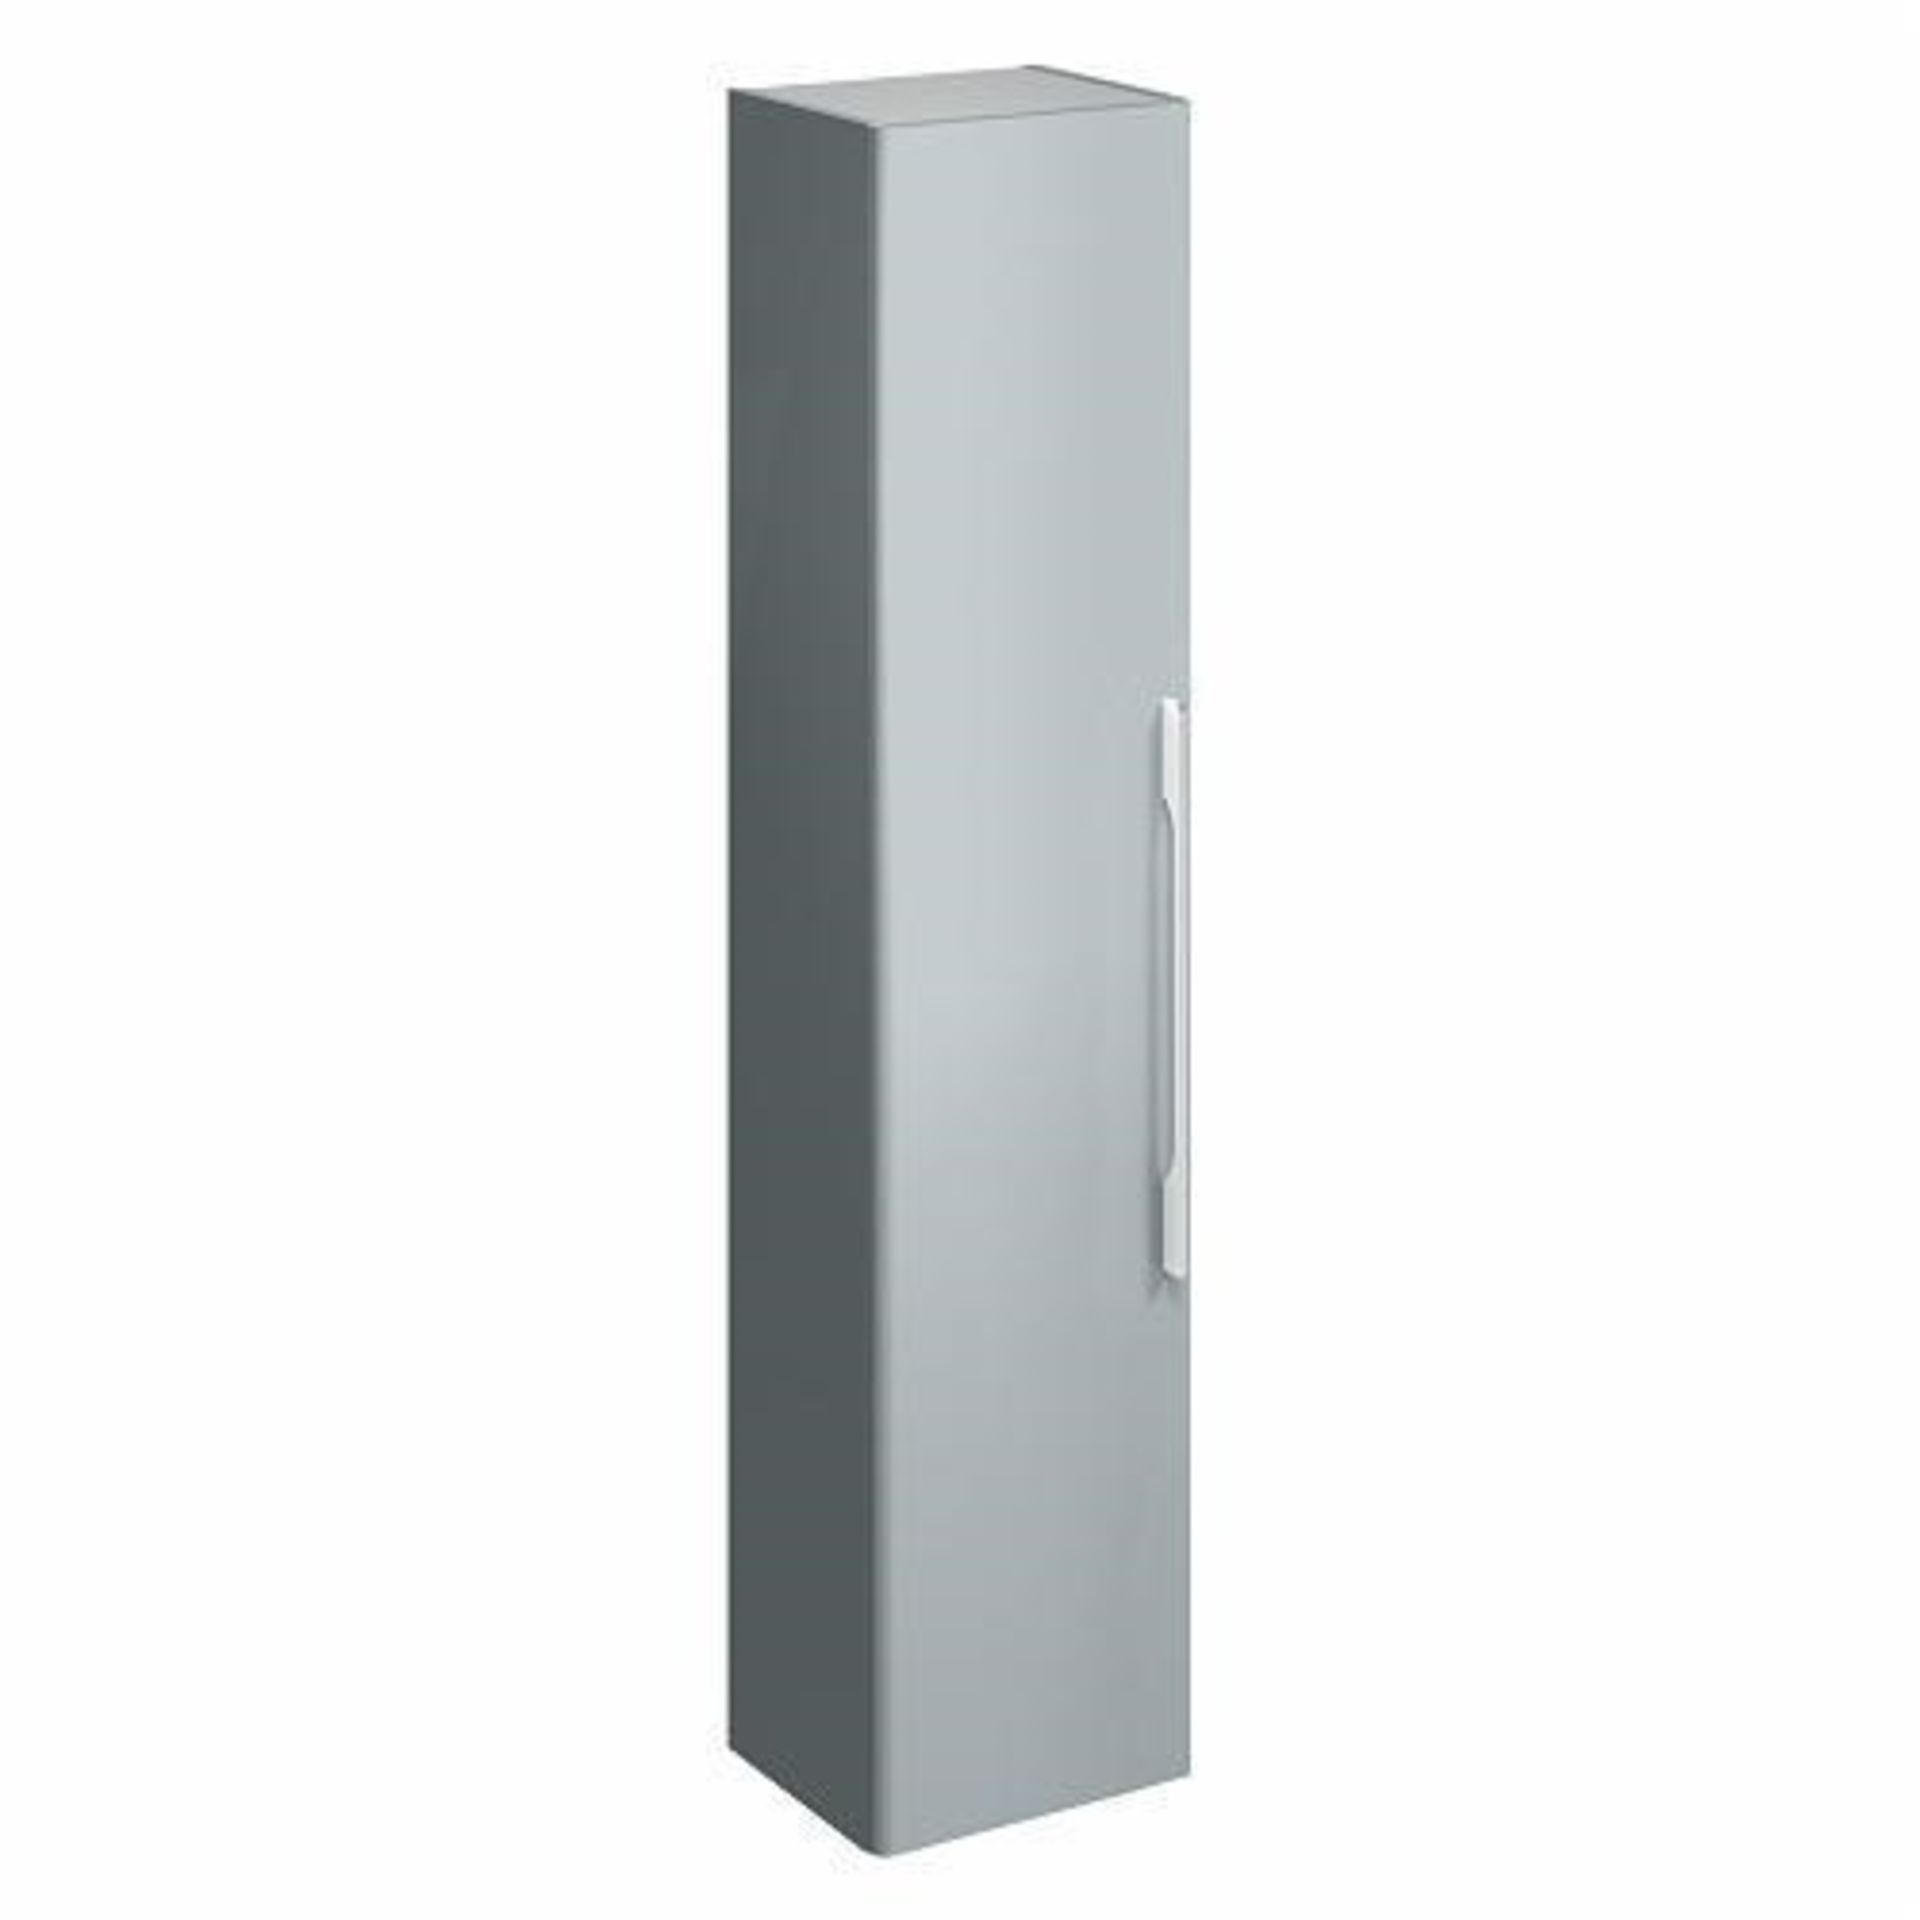 NEW (W93) Twyfords 1800mm Grey Tall Storage Unit. RRP £864.99.One door with soft closing mecha...